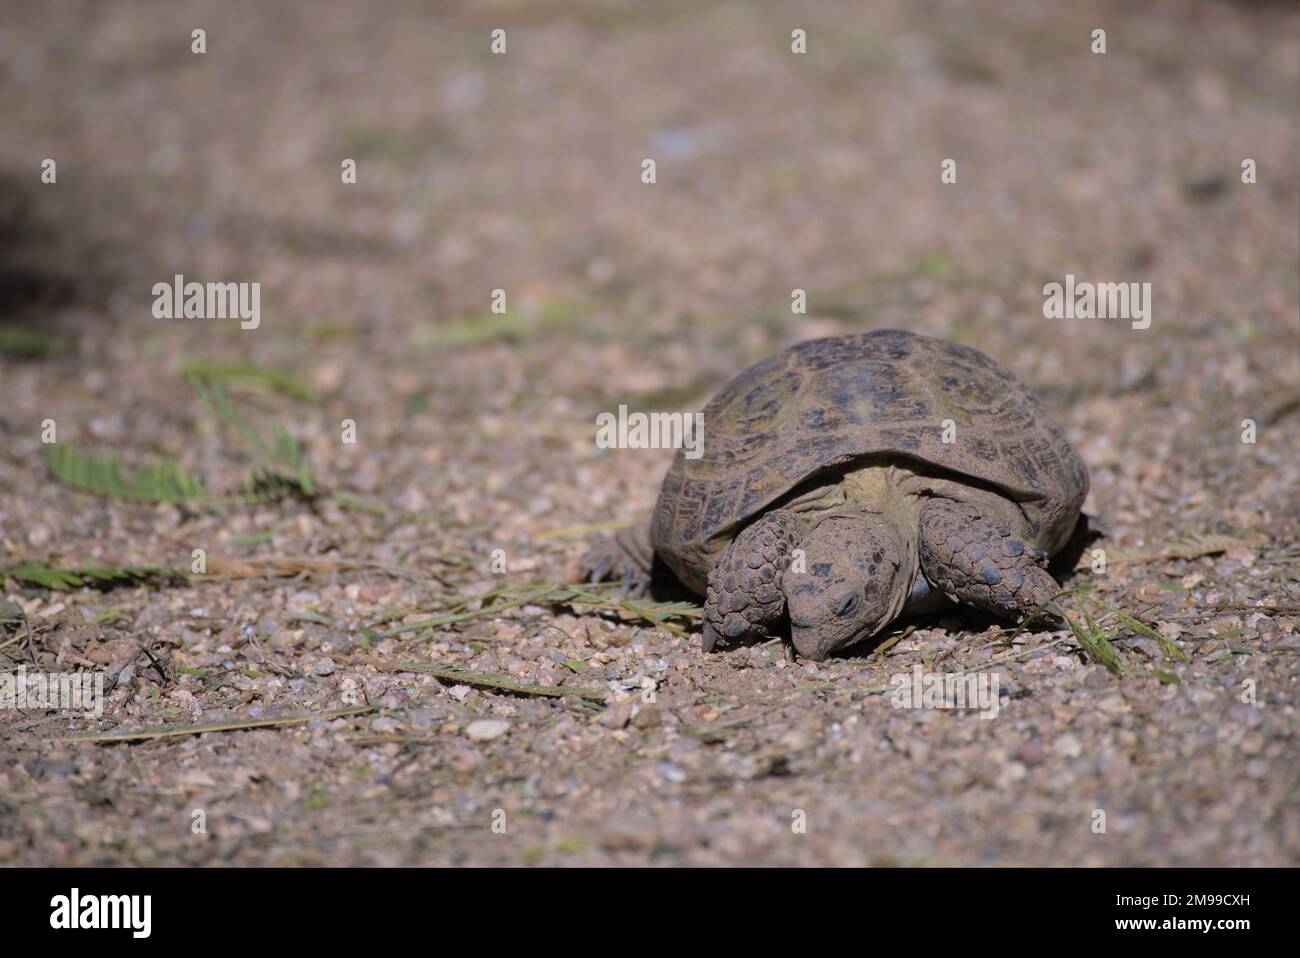 Russian tortoise (Testudo horsfieldii) standing on a field of gravel Stock Photo